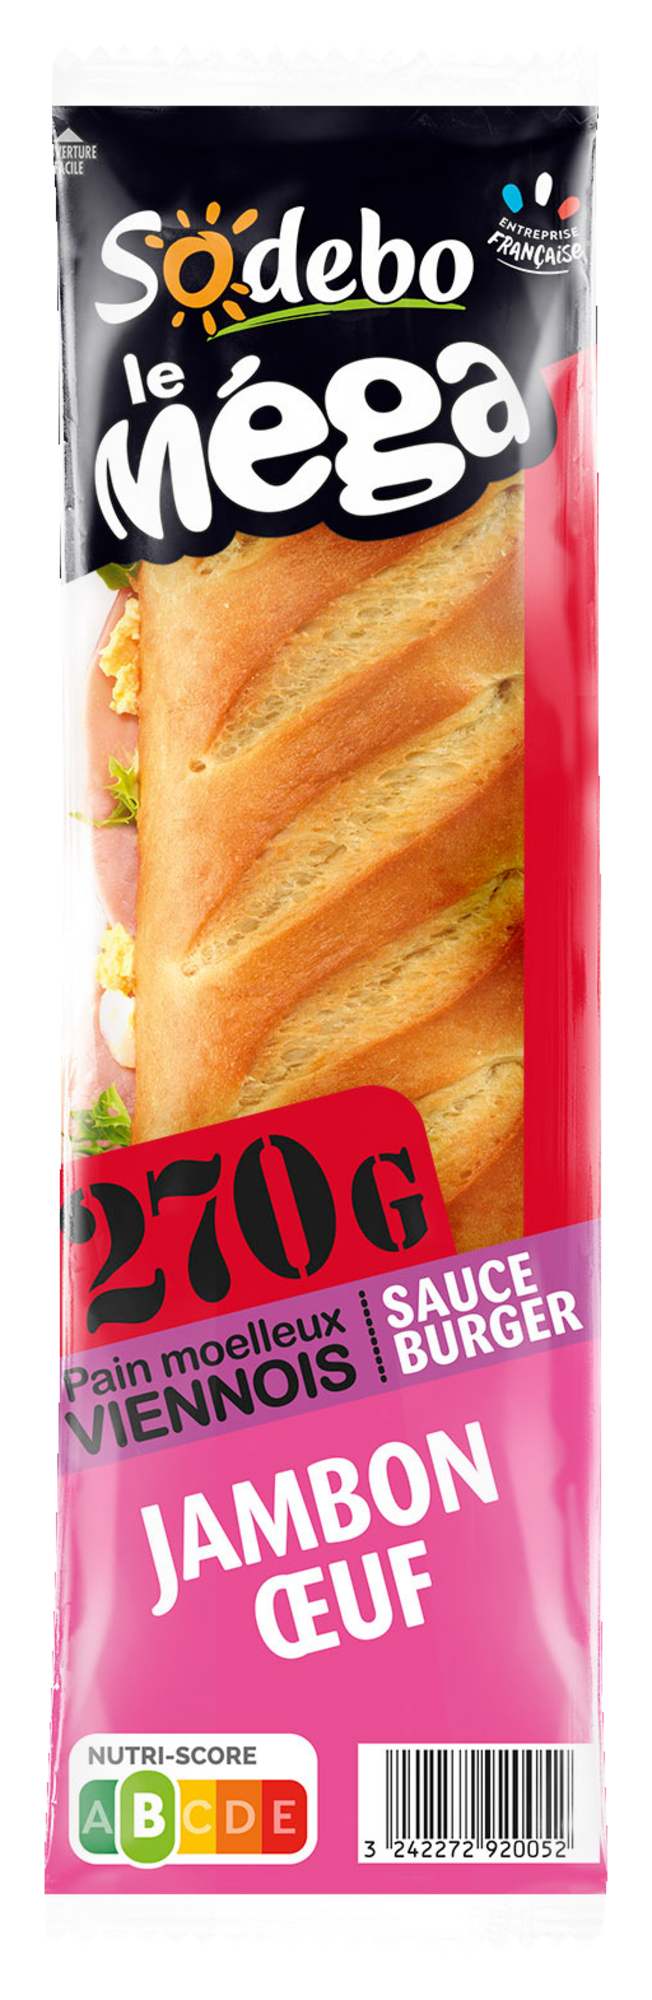 Sandwich Le Méga Jambon Oeuf